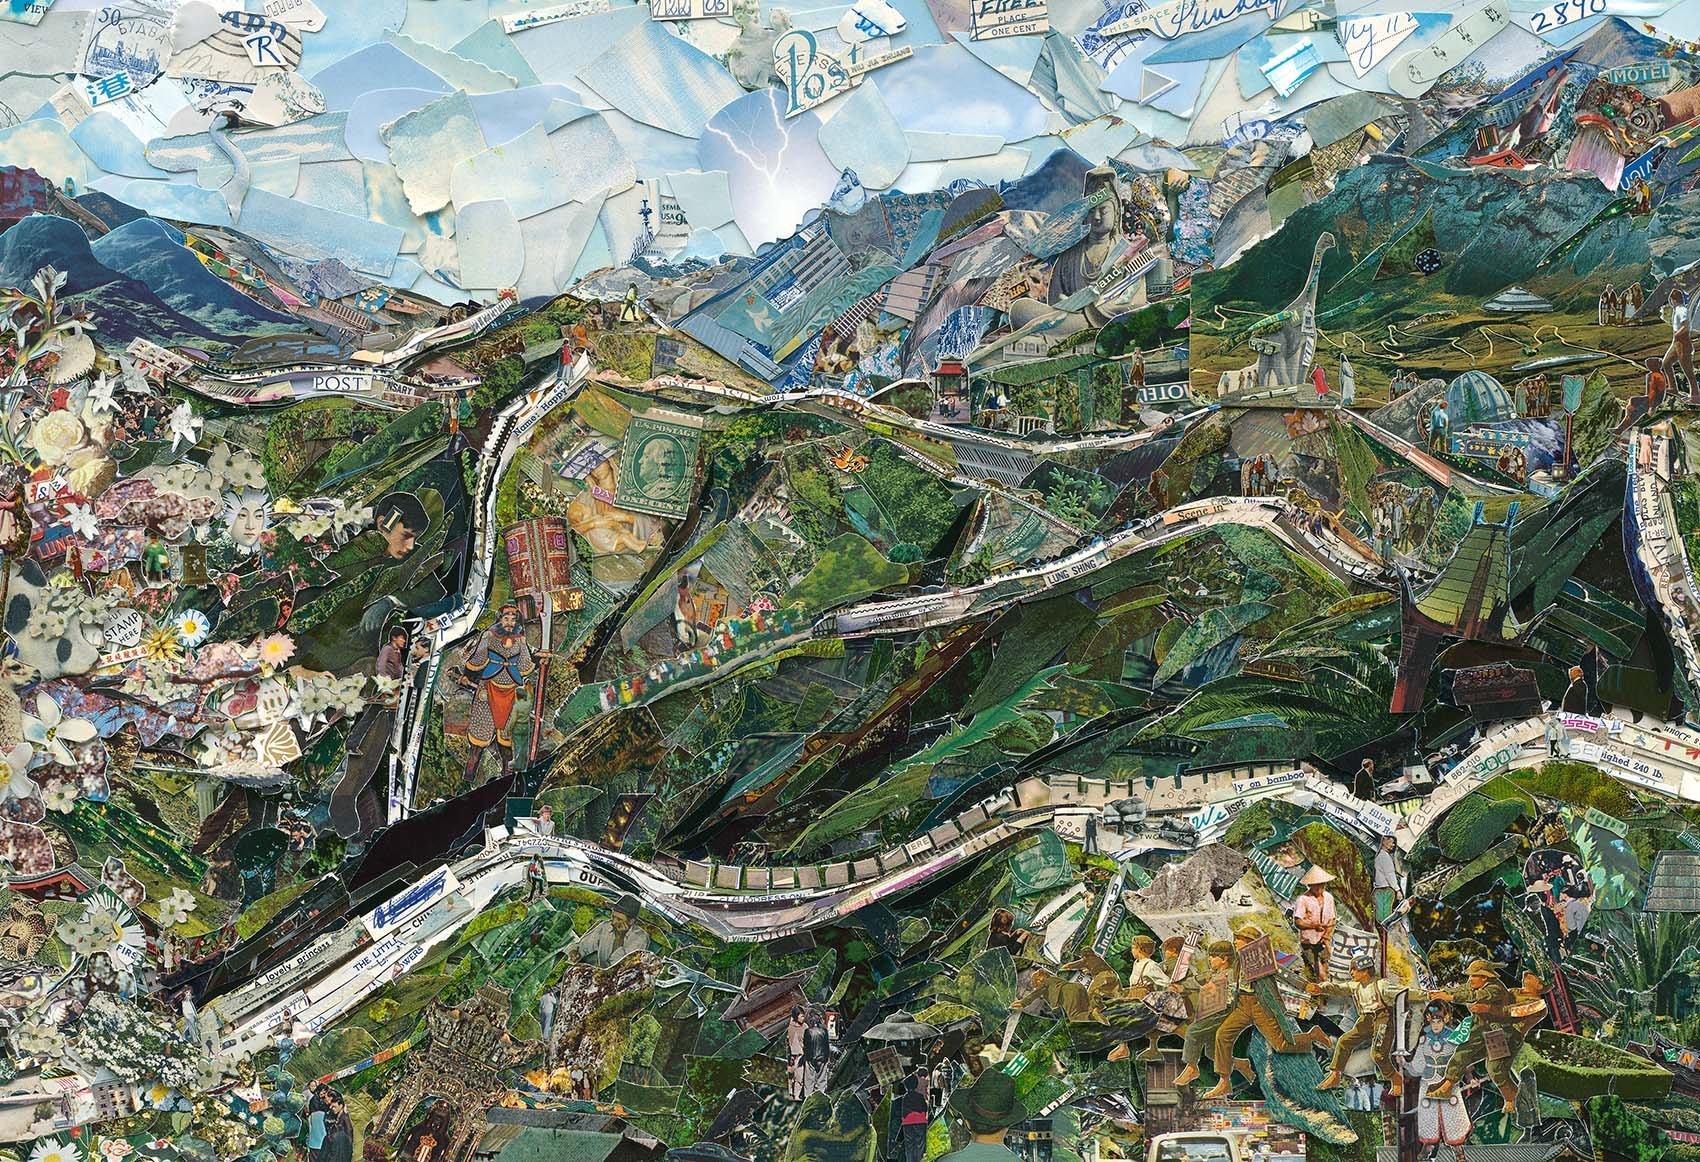  Vik Muniz,  The Great Wall of China , 2014. Edition 2 of 10. Digital C-print. 40 x 60 inches. 